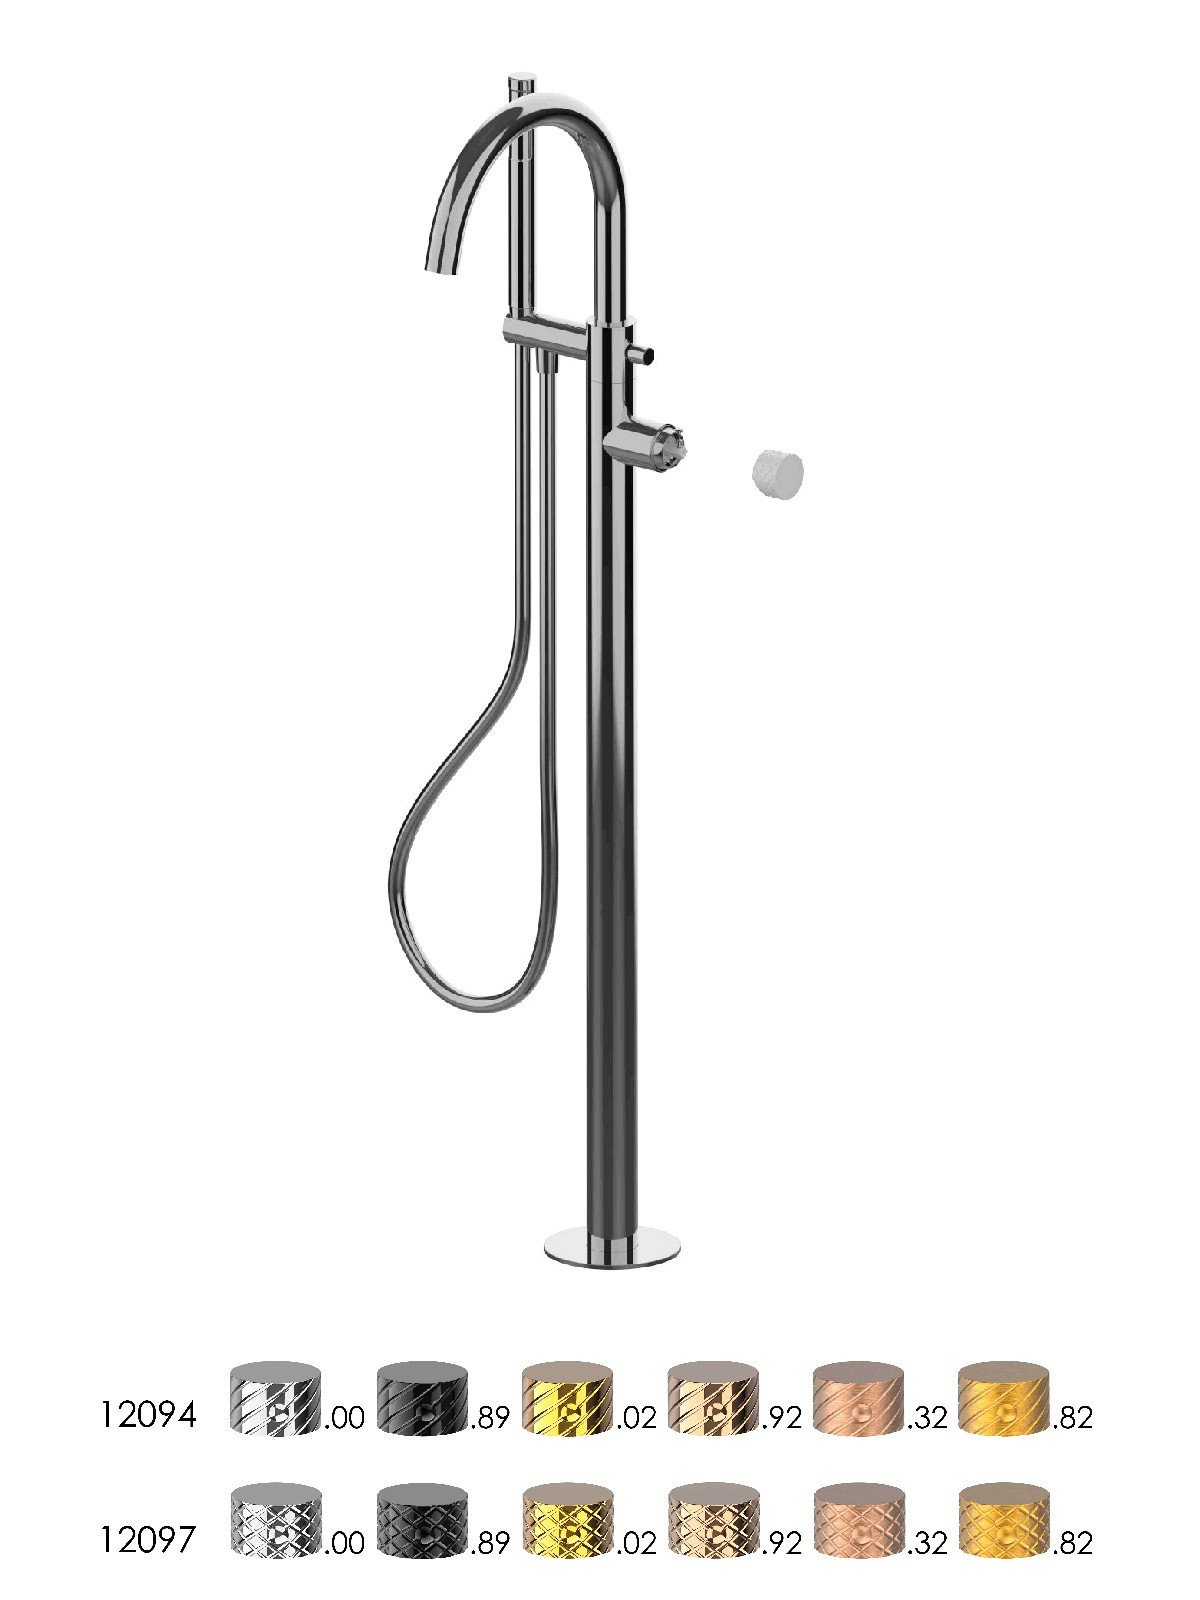 External visible components free standing bath mixer